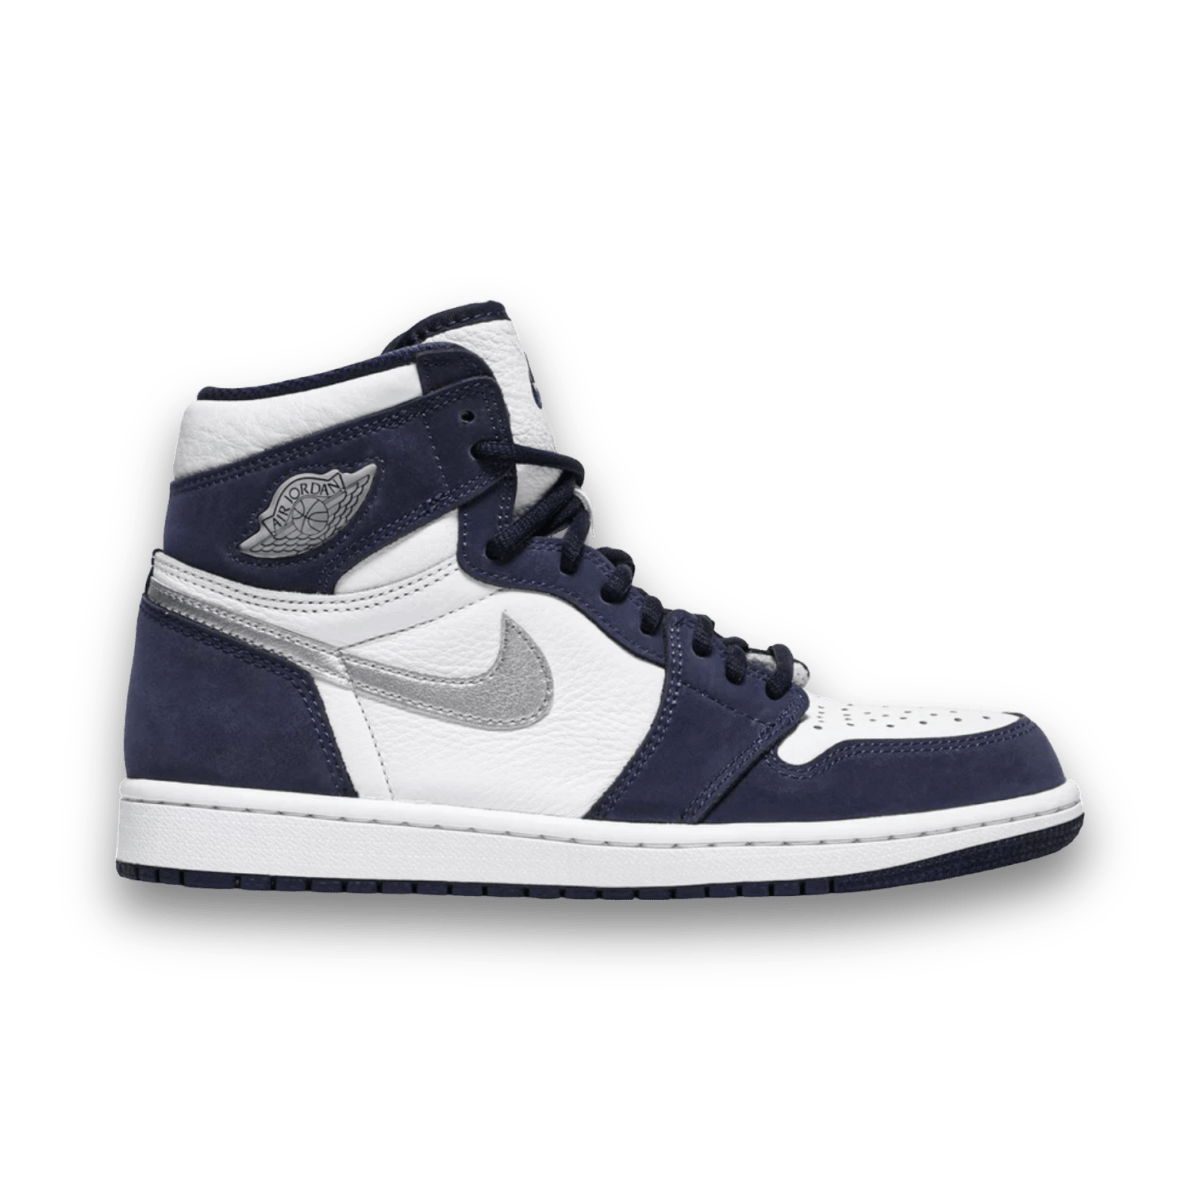 Laces for Lions Air Jordan 1 Retro High 'Midnight Navy' - sneaker - High Sneaker - Jordan - Jawns on Fire